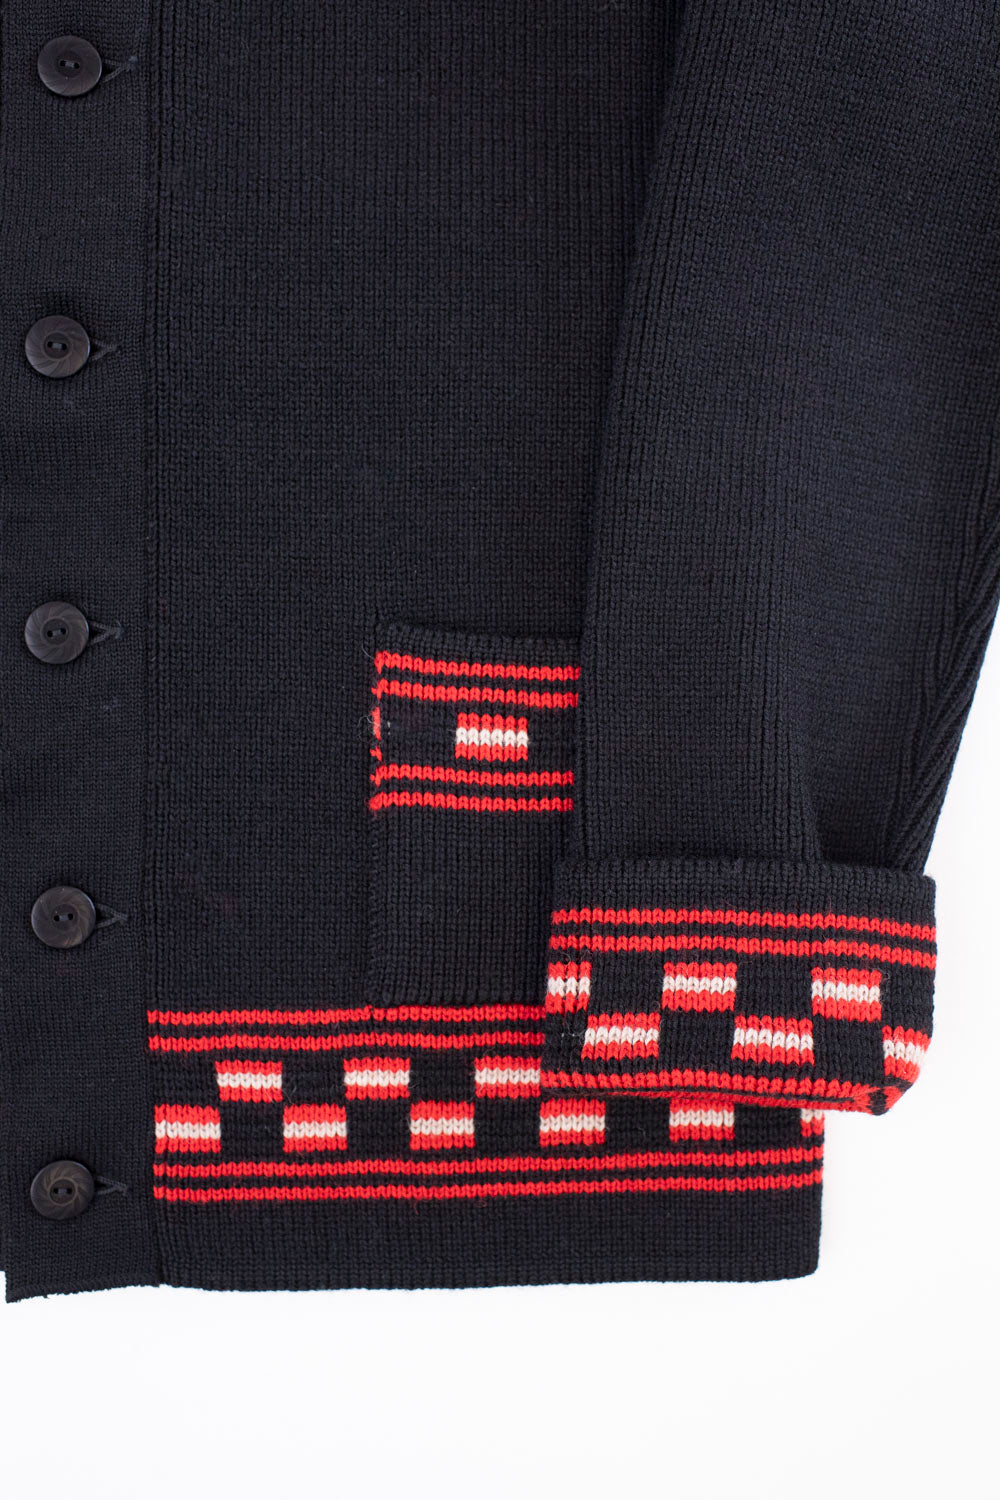 Lot JG-K01 - 1920 The Bradley Sweater - Black, Red